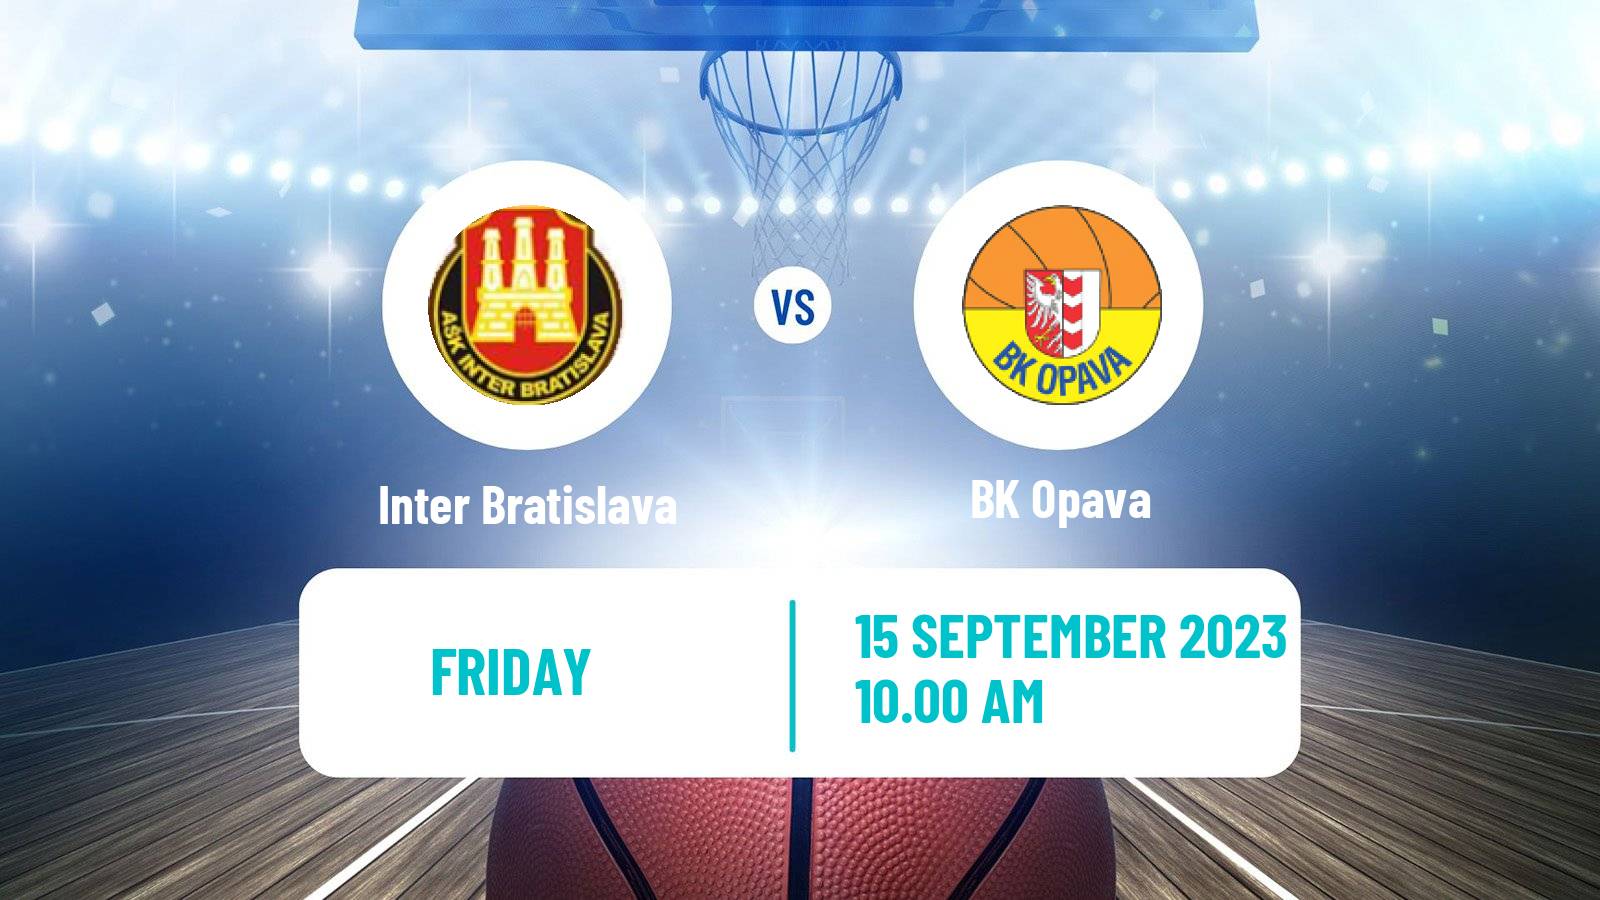 Basketball Club Friendly Basketball Inter Bratislava - Opava